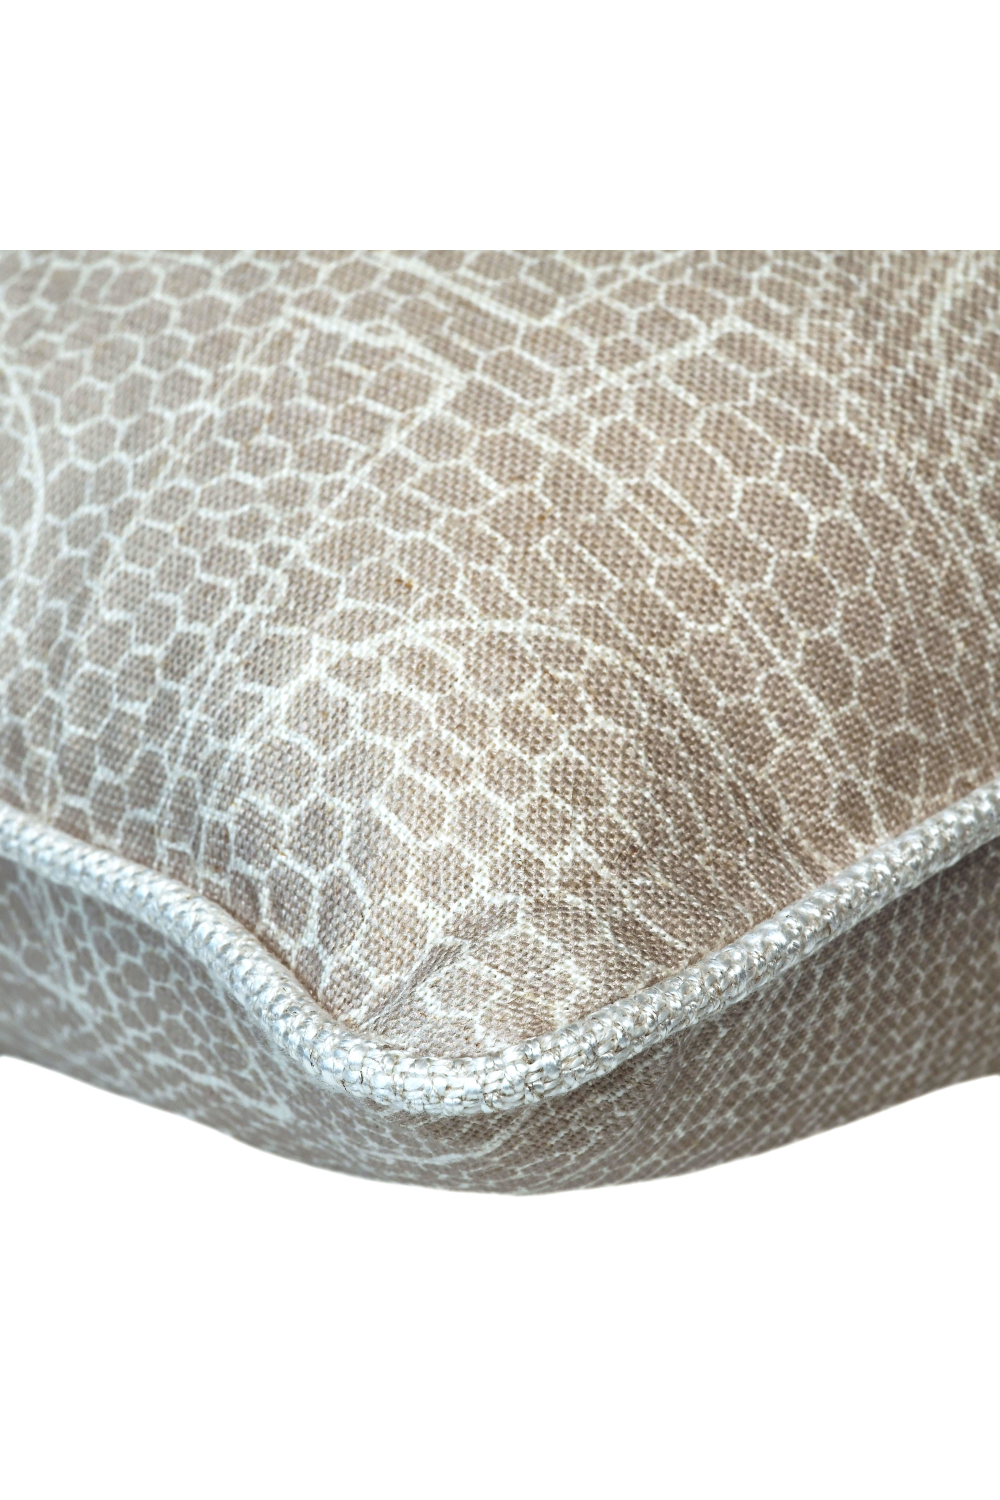 Snakeskin Print Square Cushion | Andrew Martin Curzon | OROA